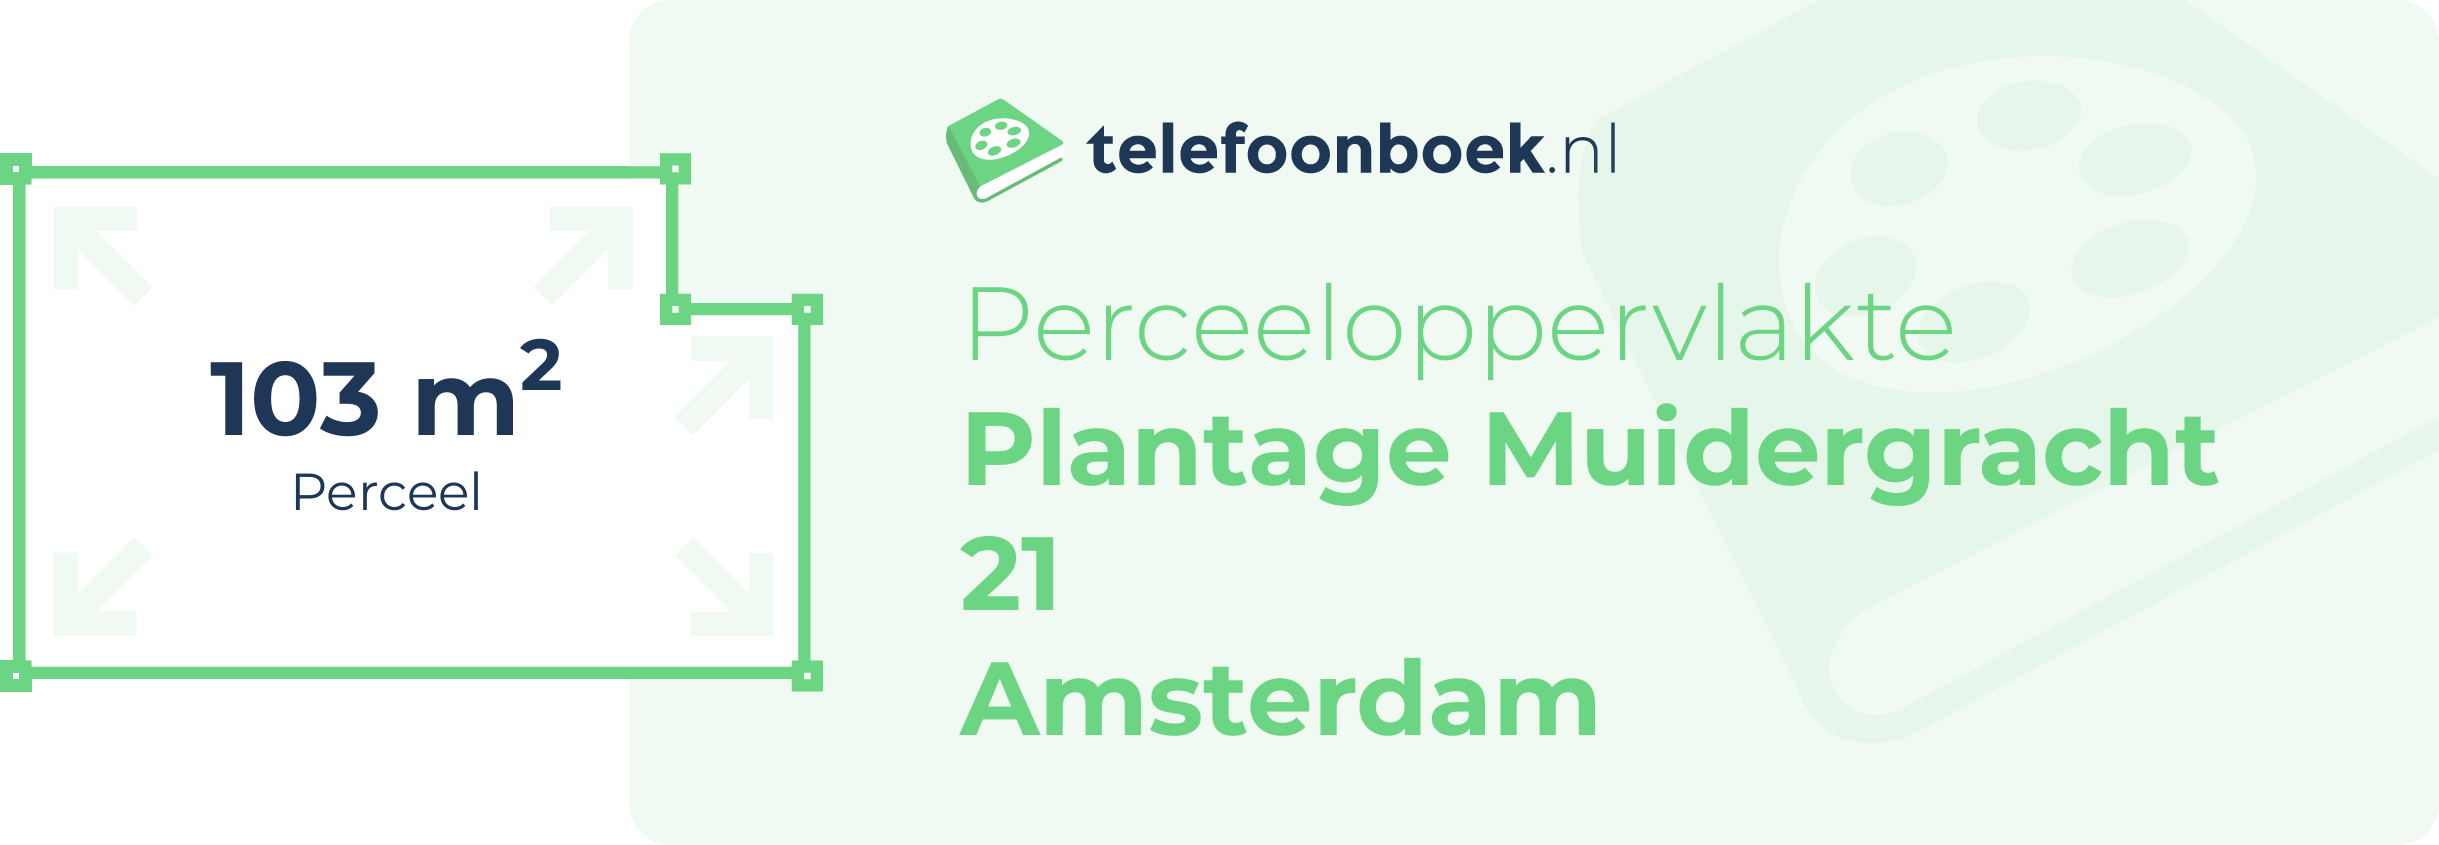 Perceeloppervlakte Plantage Muidergracht 21 Amsterdam